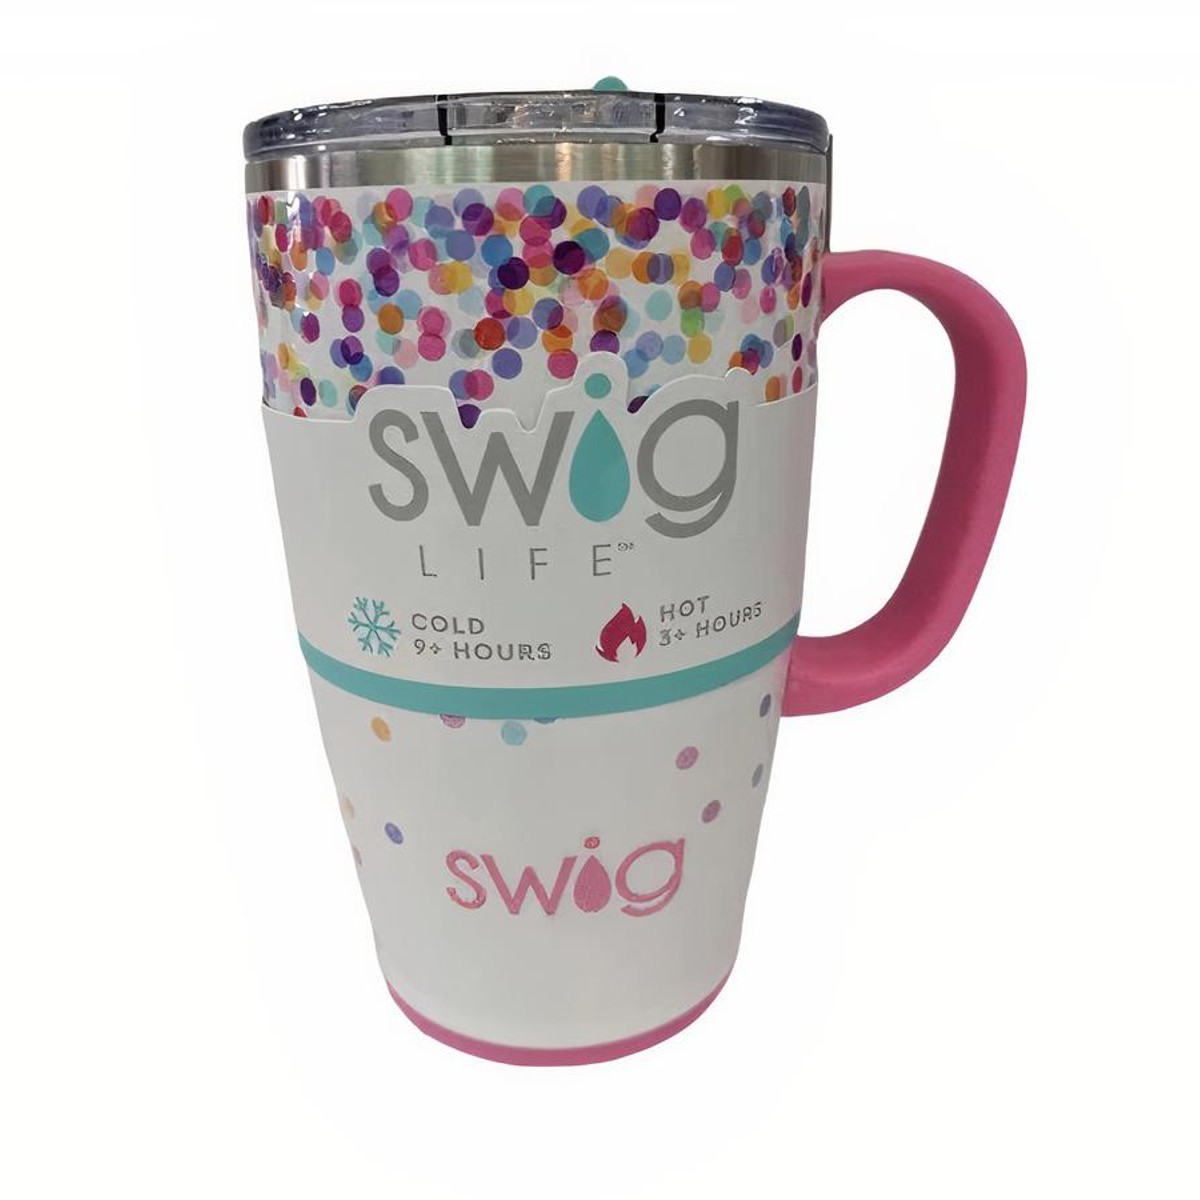 Swig Life Water Lily 18 Oz Travel Mug Swig Life Travel Mug 